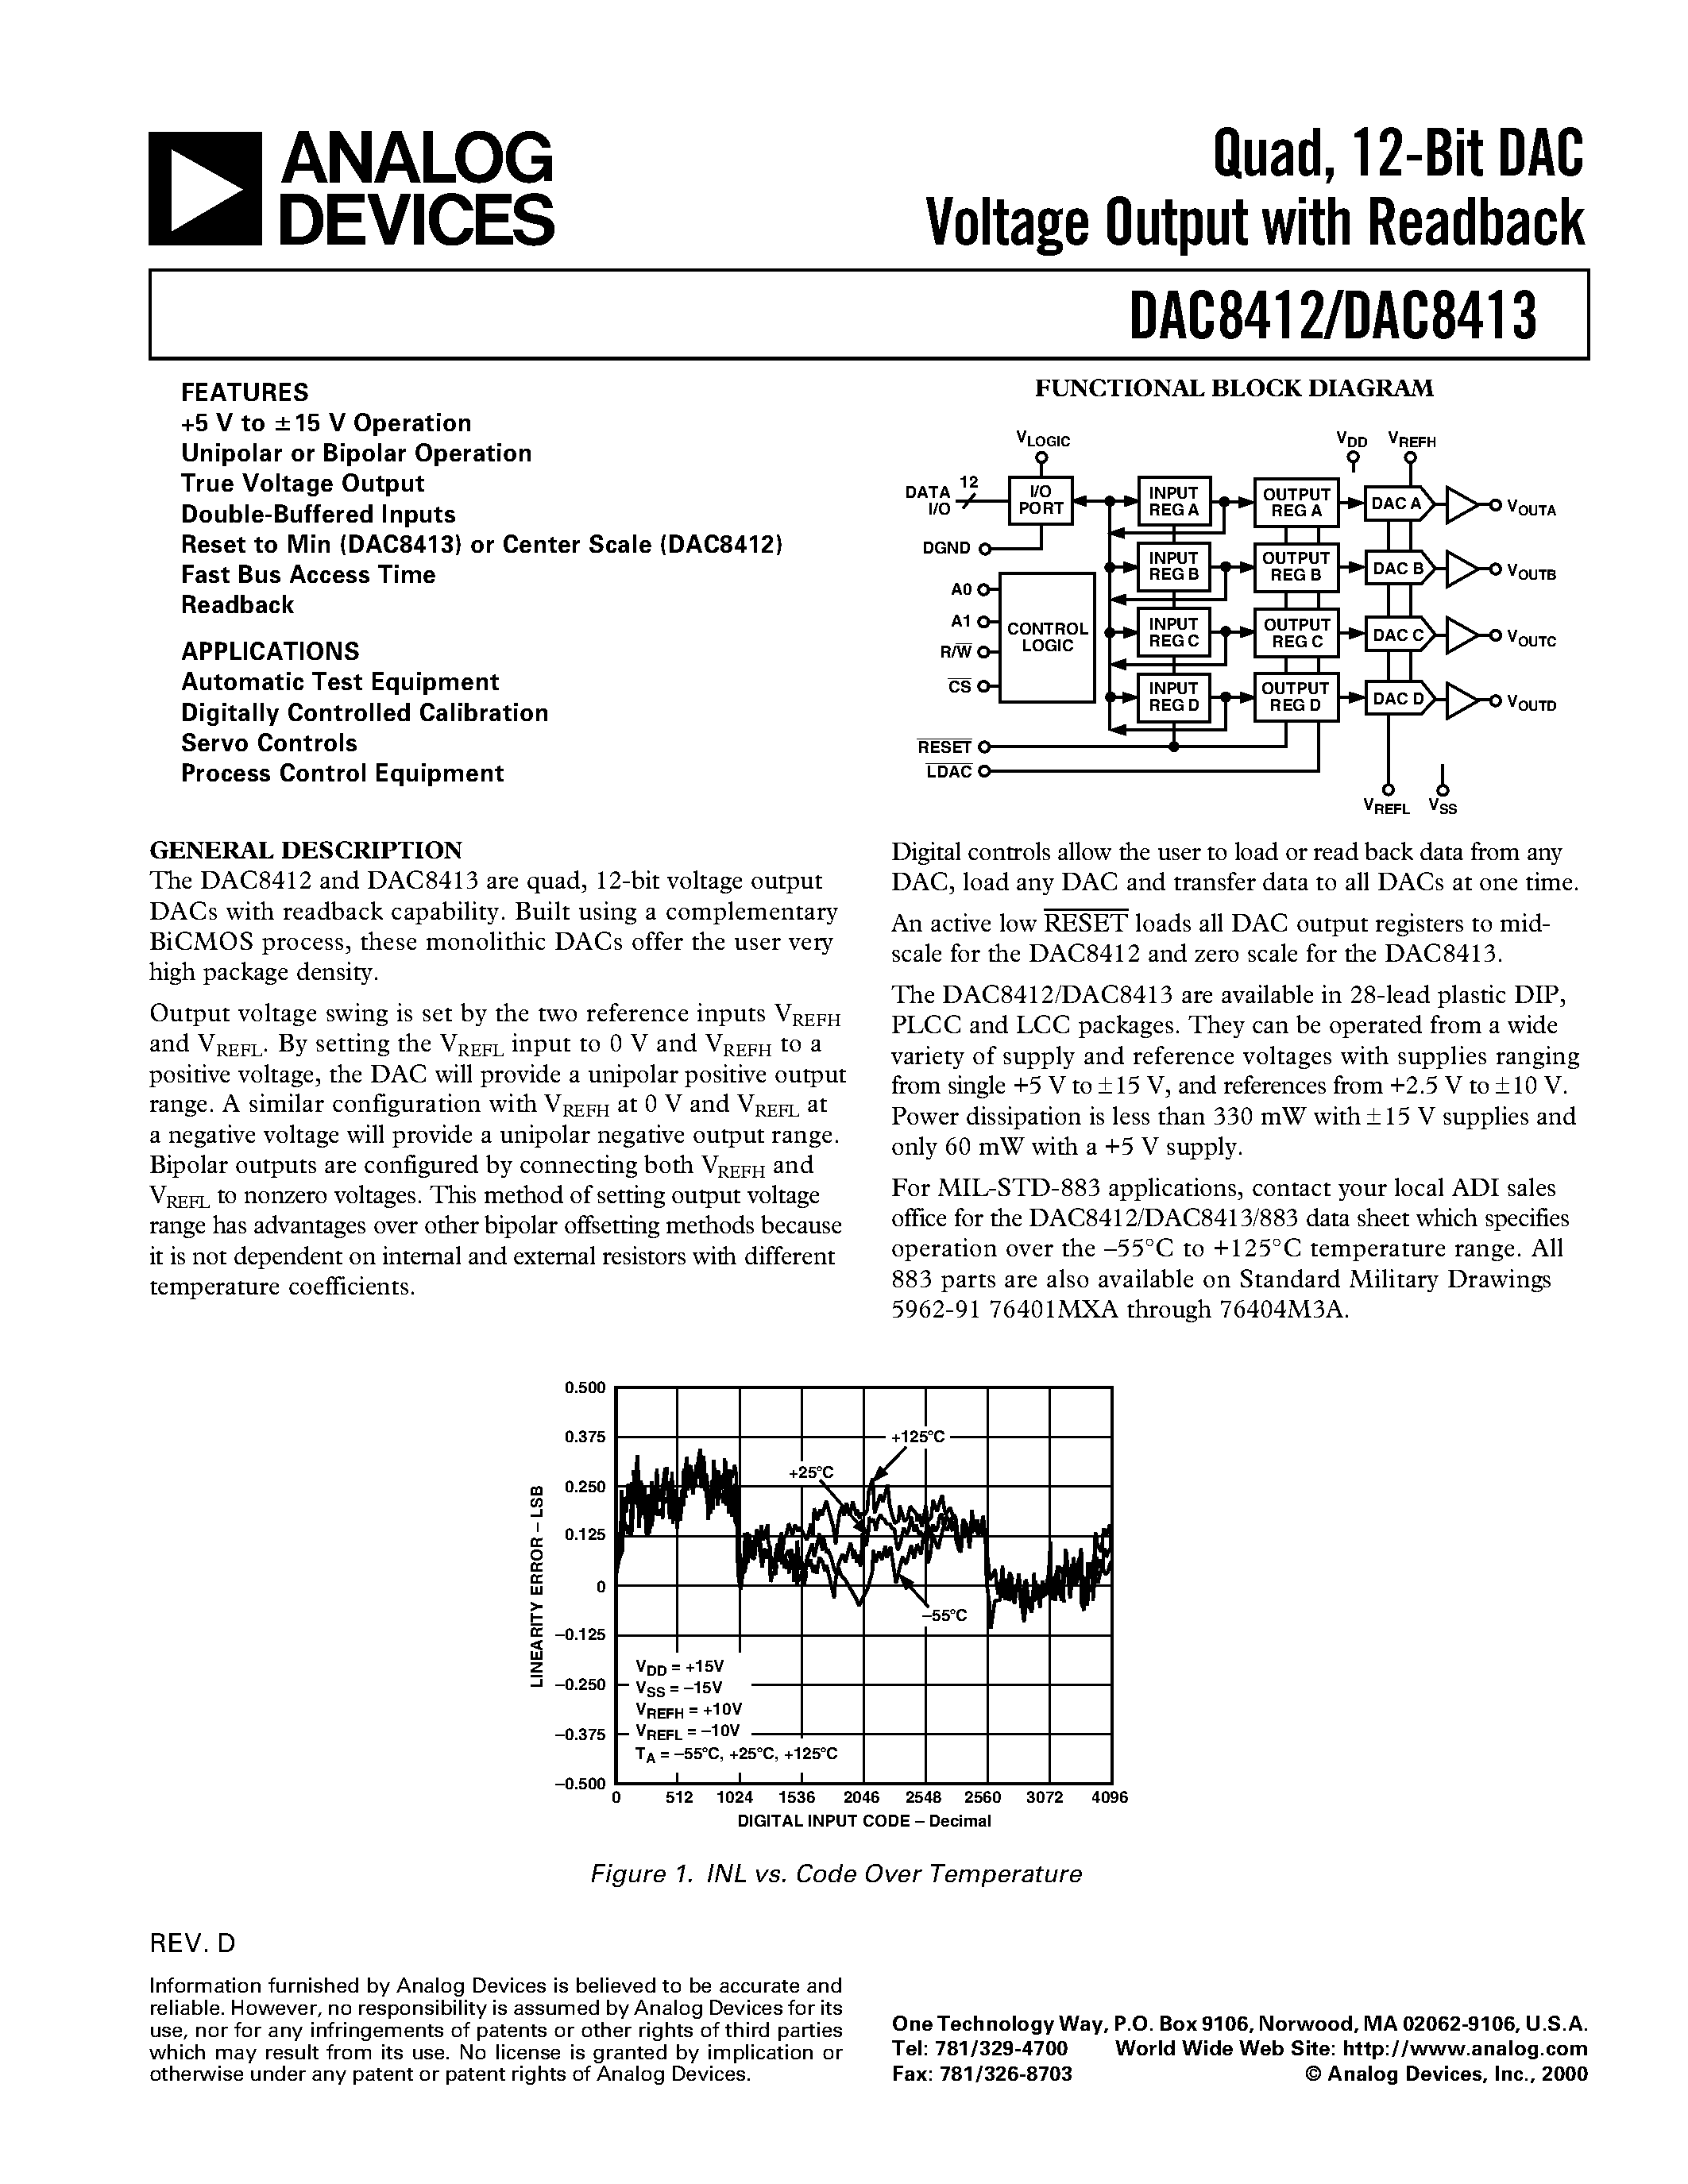 Даташит DAC8413 - Quad/ 12-Bit DAC Voltage Output with Readback страница 1